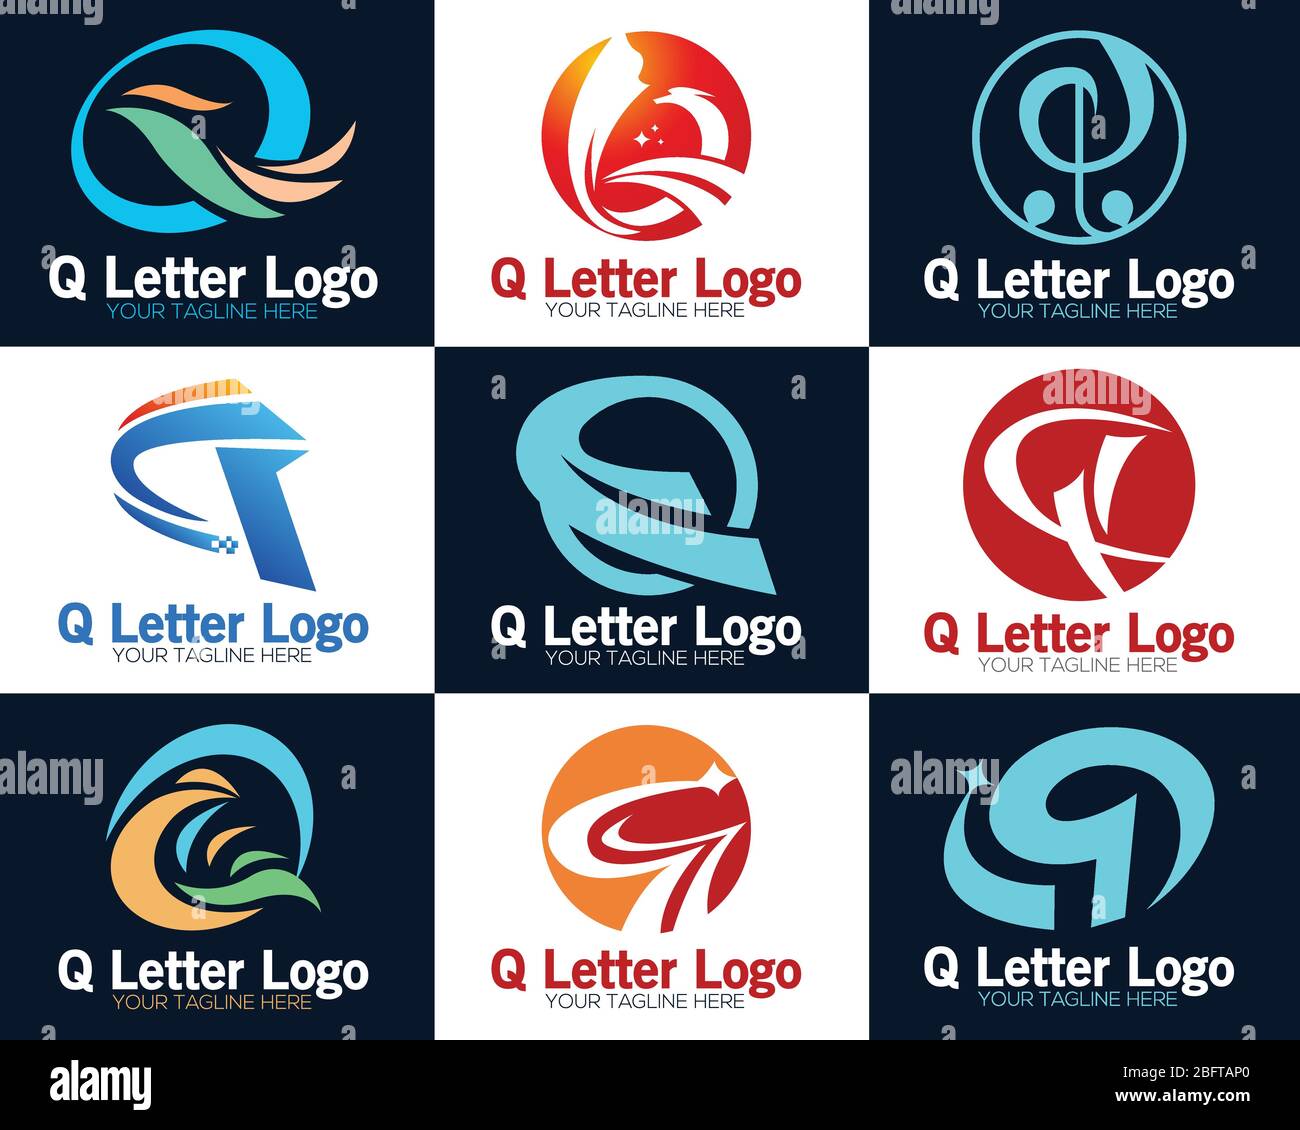 Stylish Q letter technology network logo. Digital logo icon. Letter Q vector element. Stock Vector